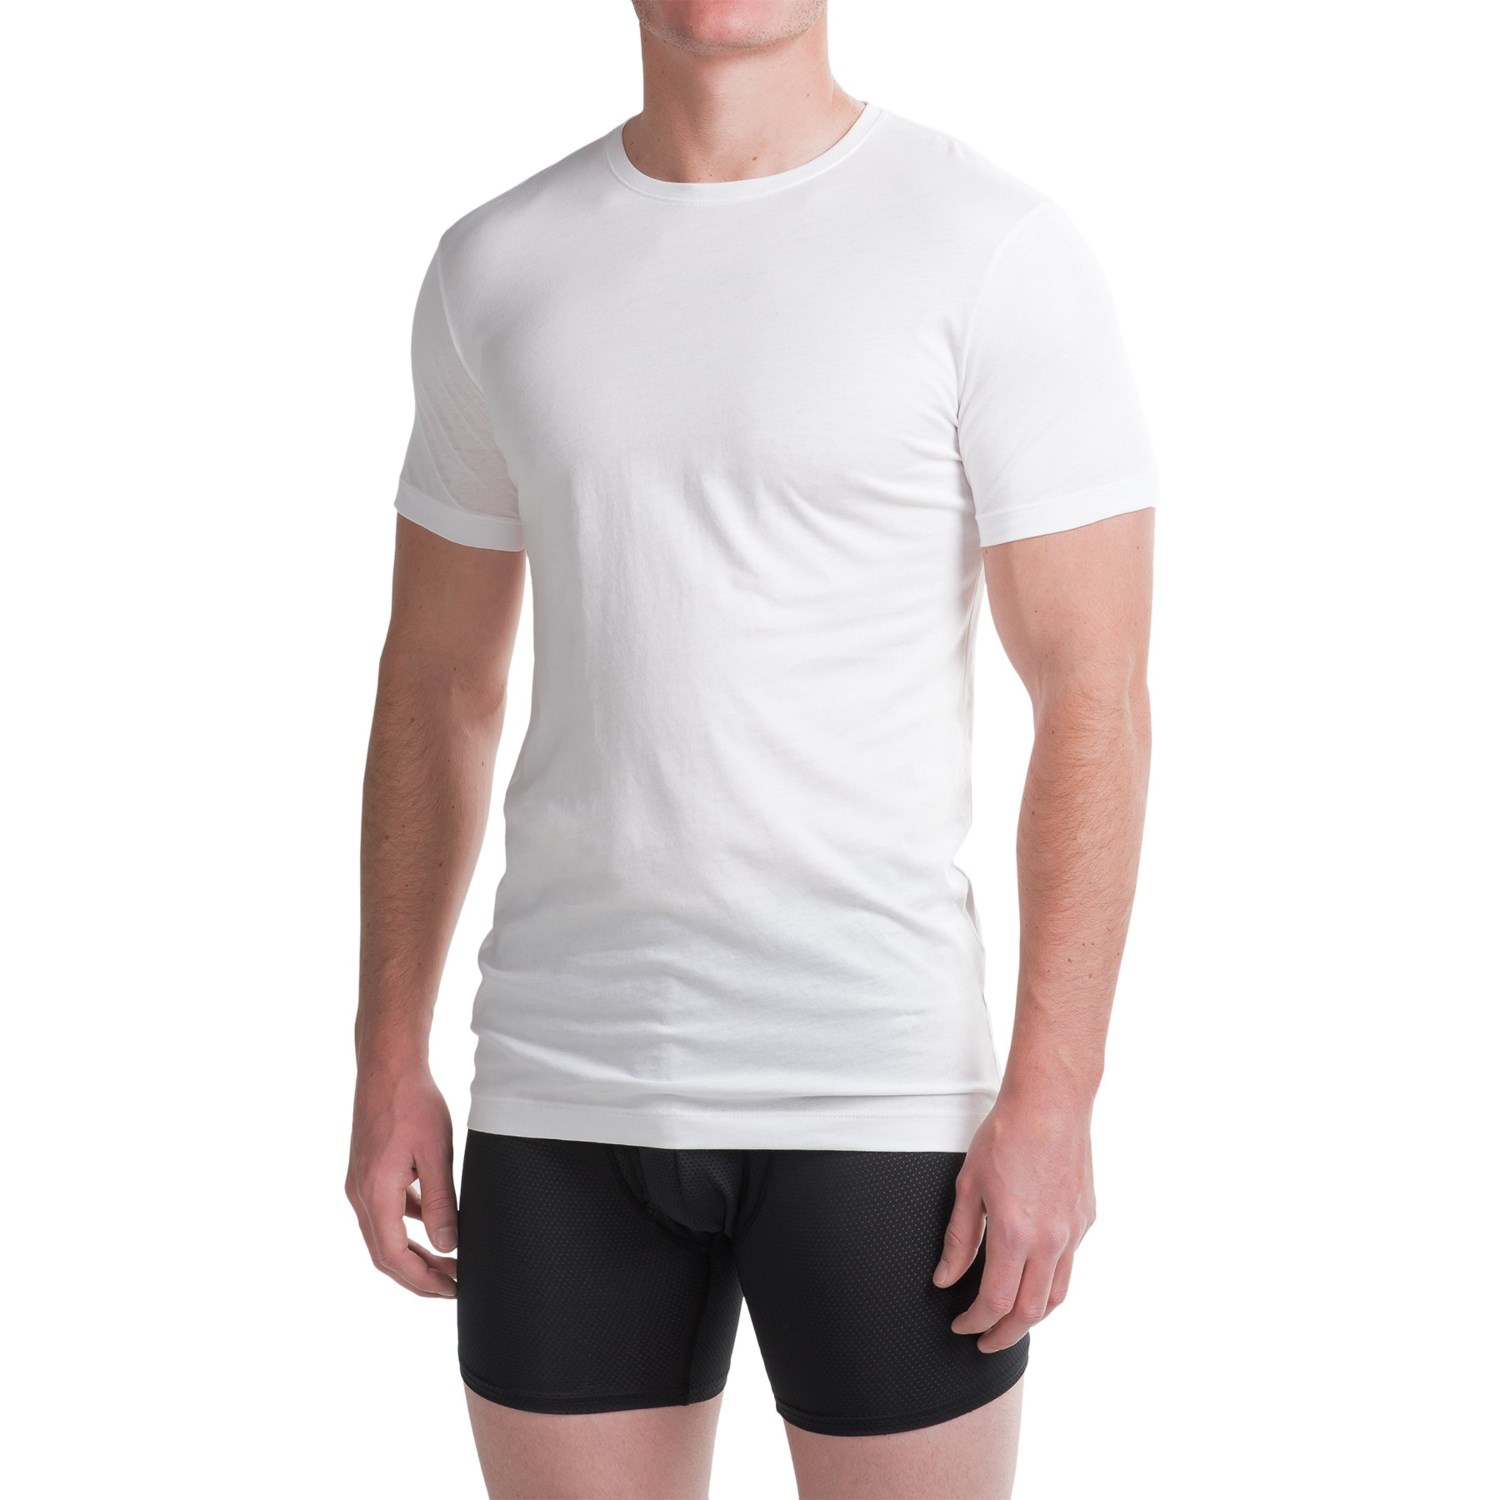 Ragman Pima Cotton Crew Neck Undershirts (For Men) - Save 80%